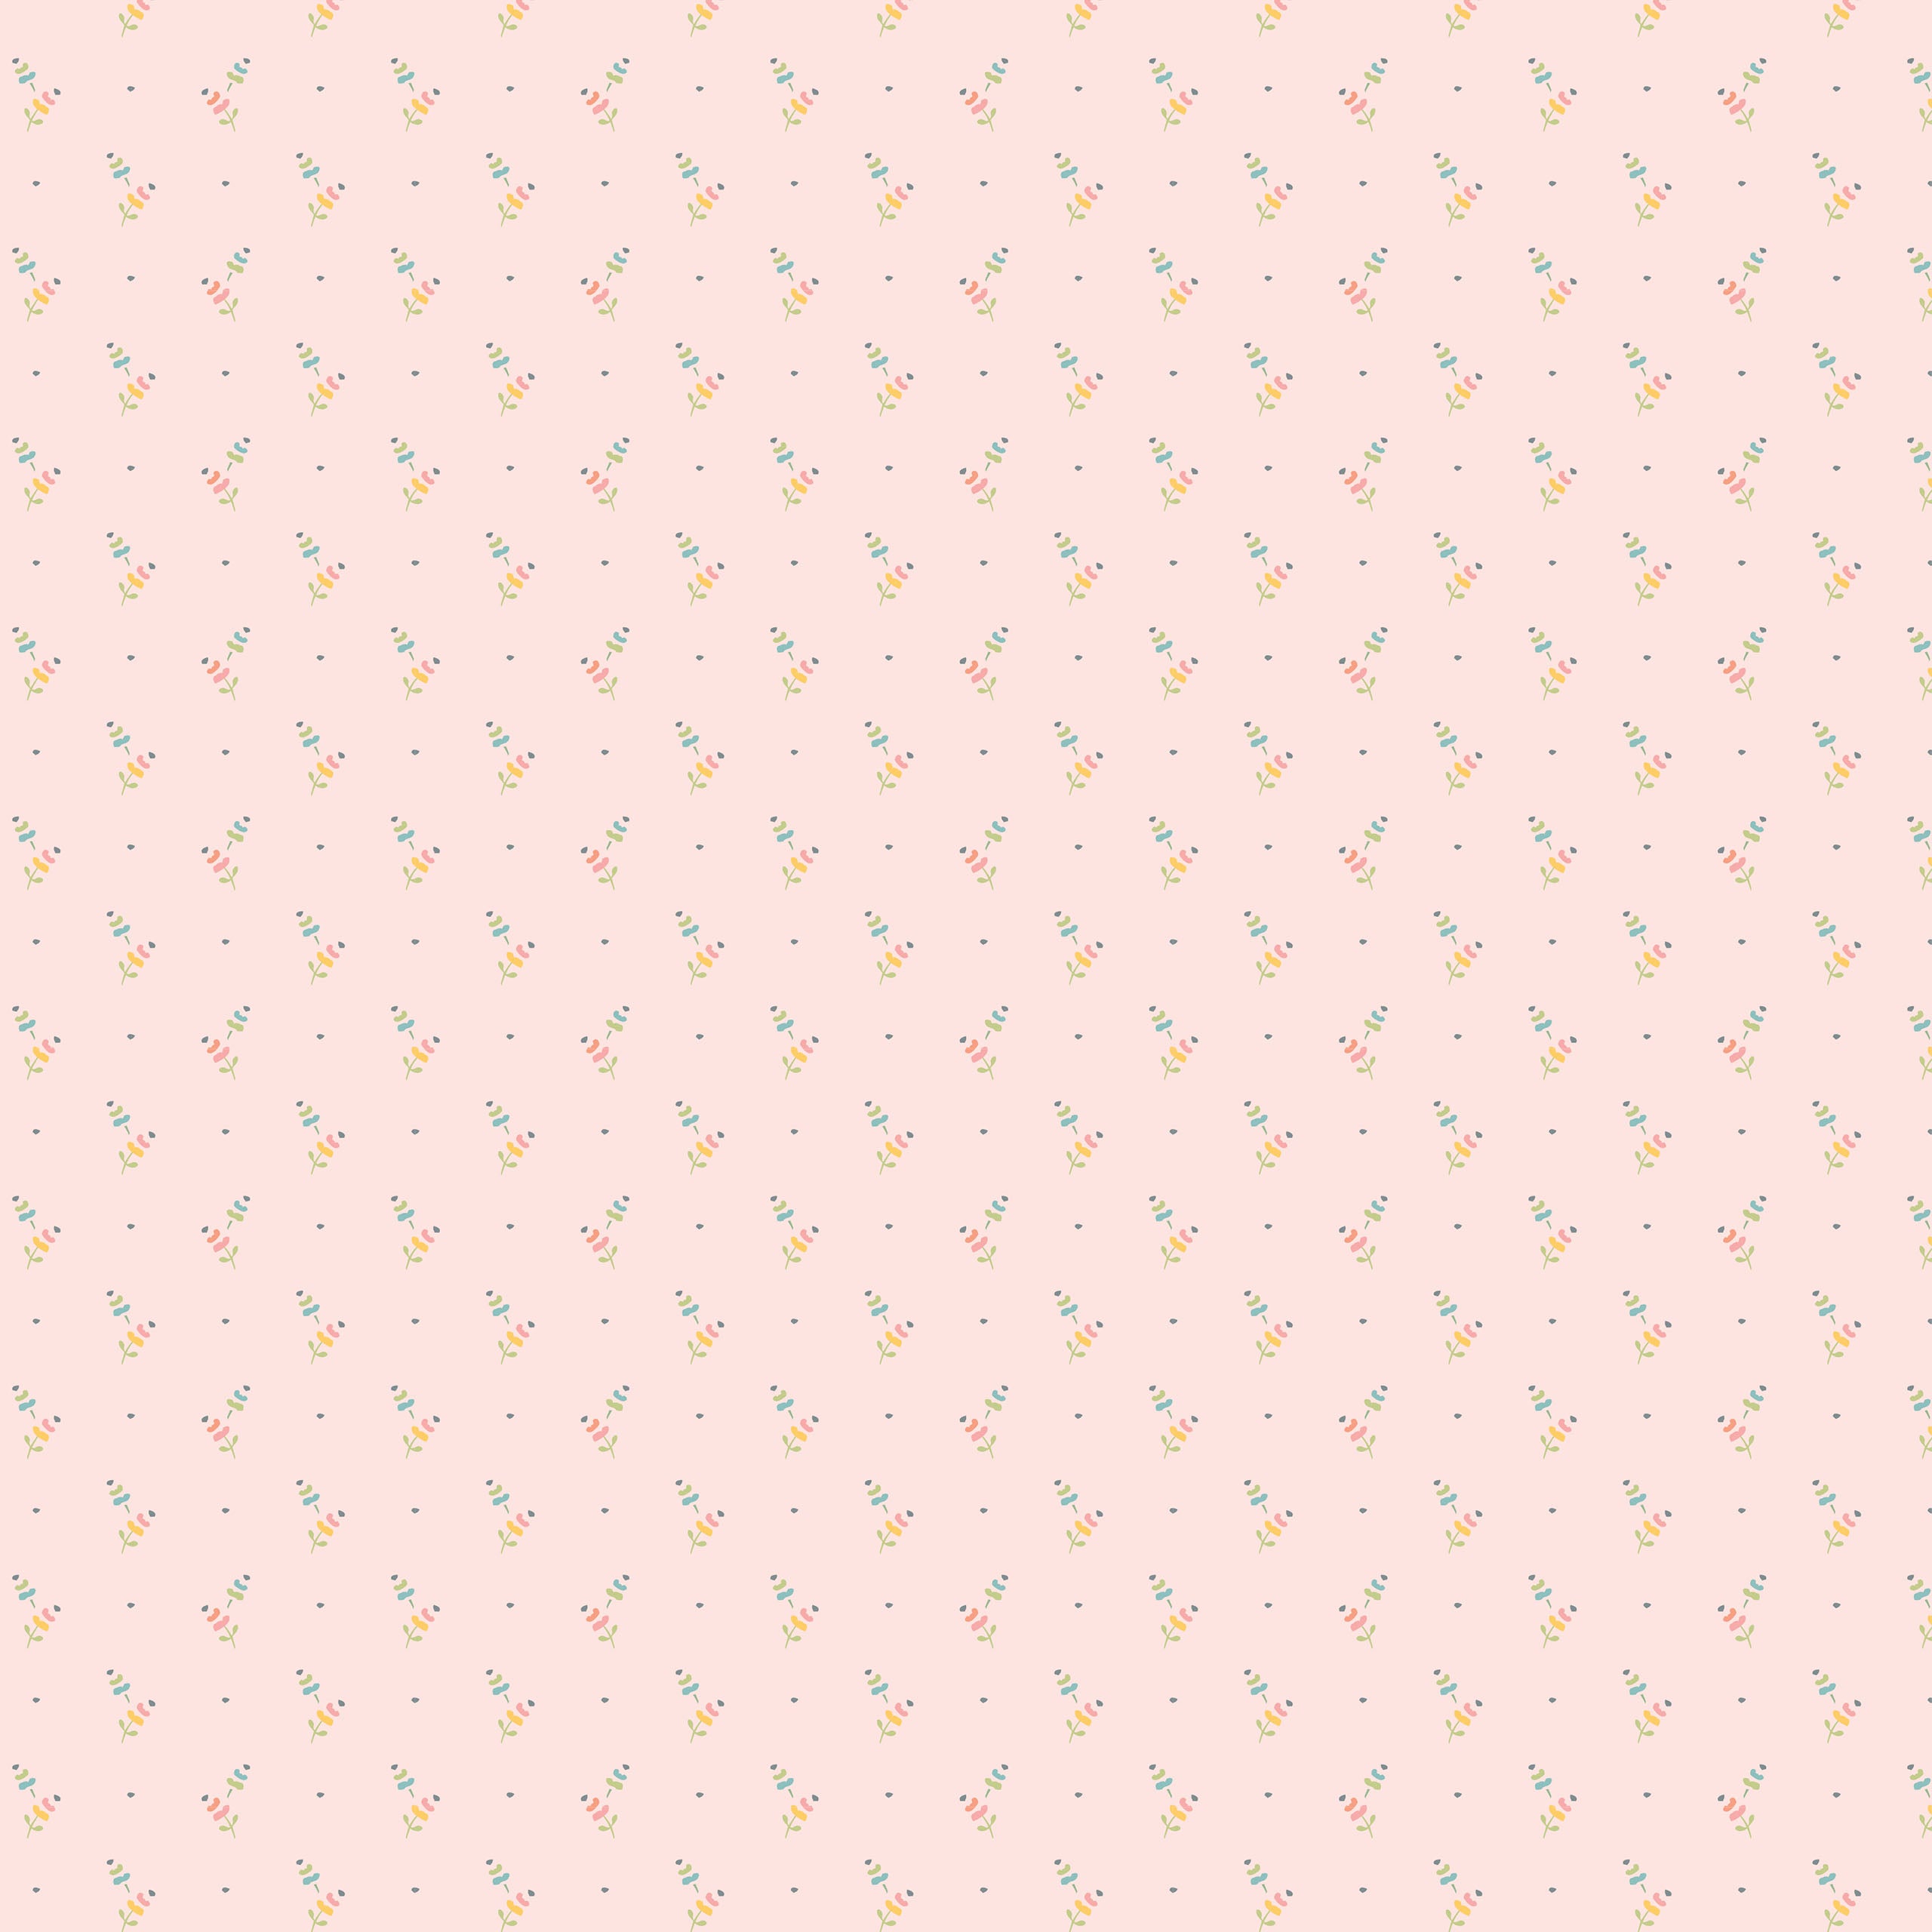 Hollyhock Lane Pink Kindness Yardage by Lori Woods for Poppie Cotton Fabrics